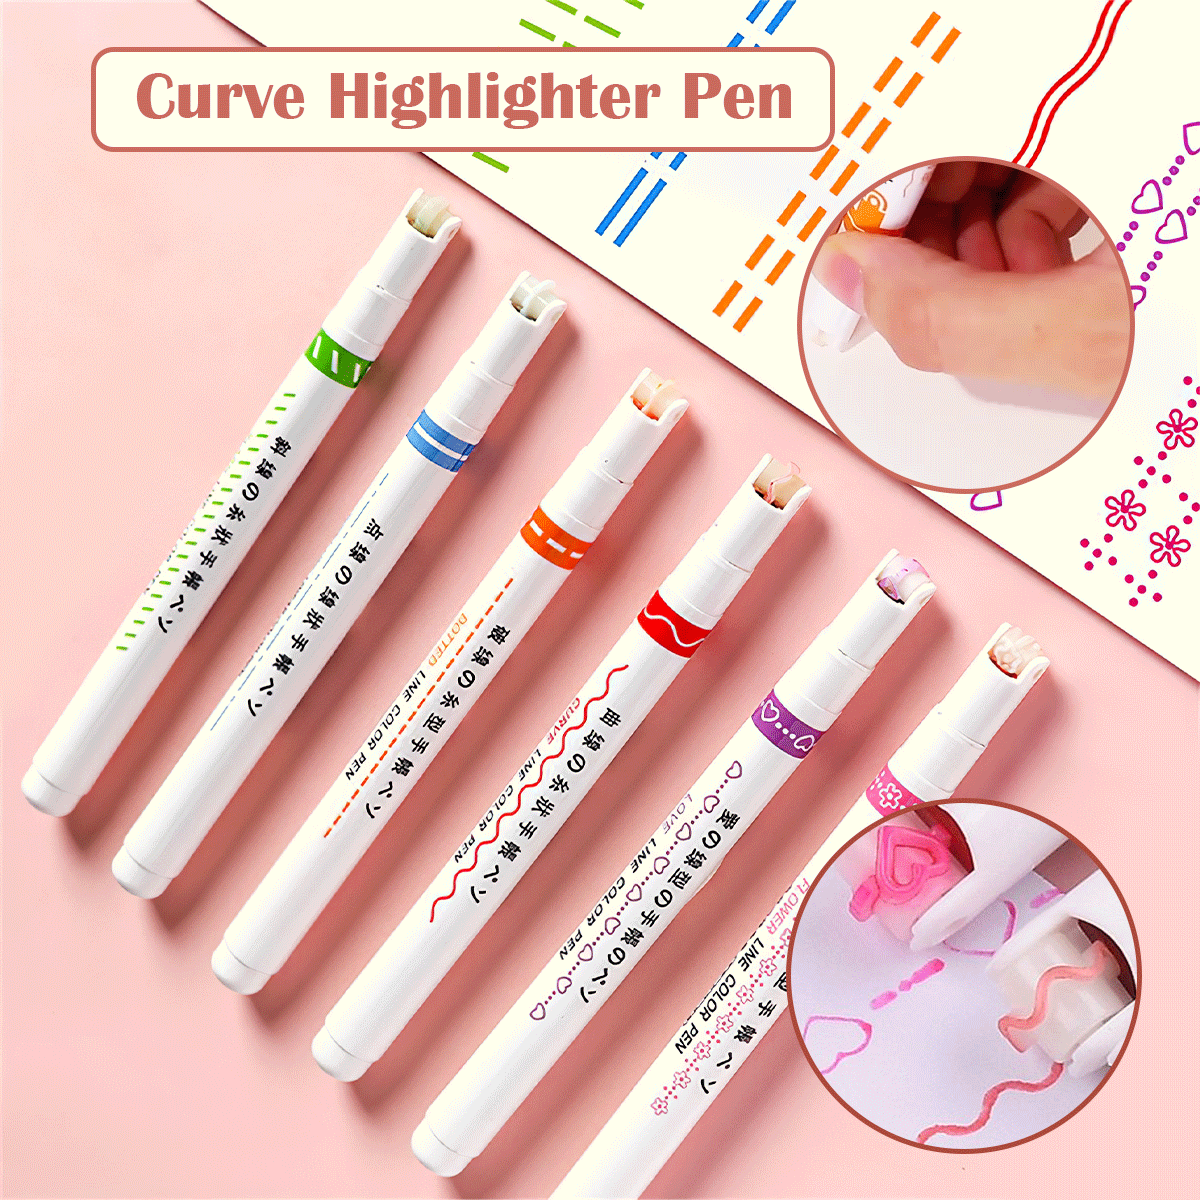 Curve Highlighter Pen